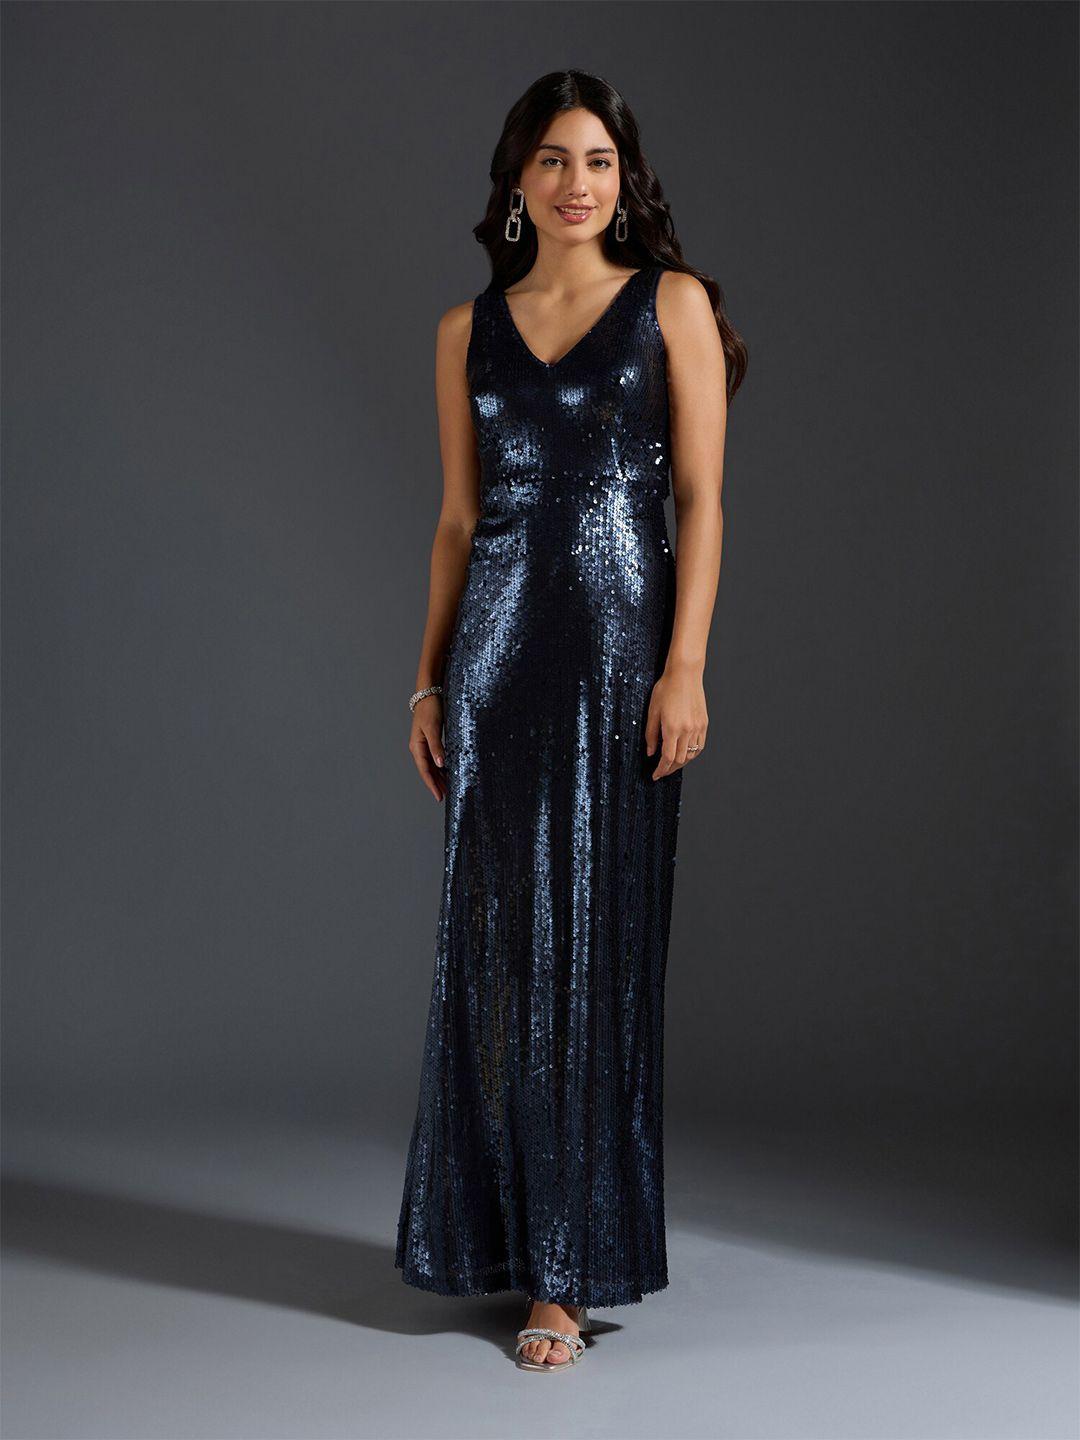 20dresses navy blue embellished v-neck sleeveless sequinned maxi dress